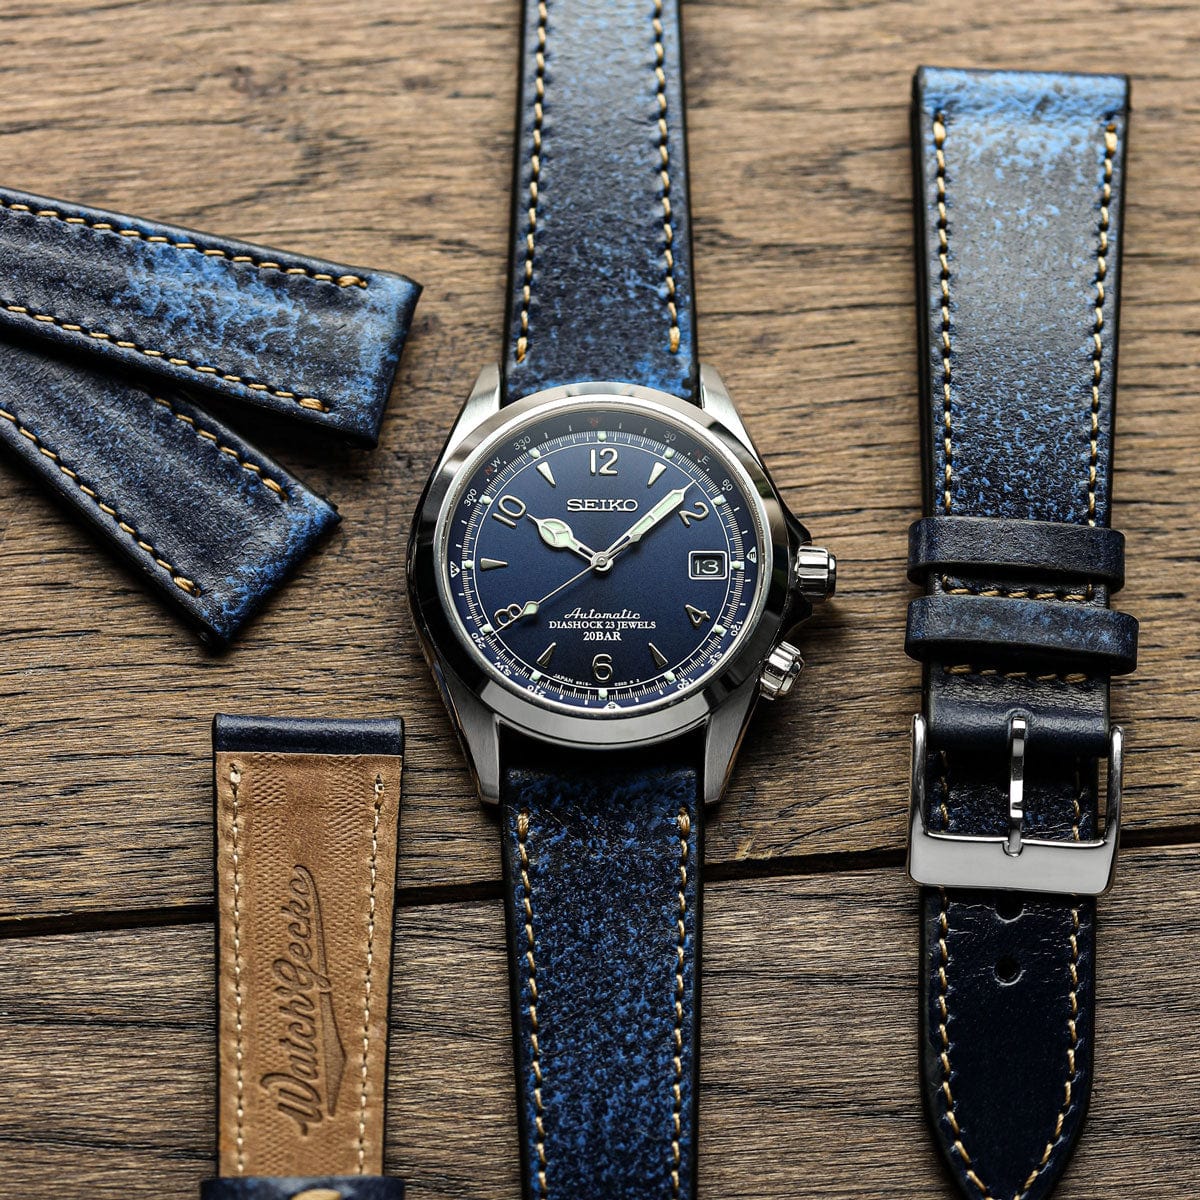 Radstock Vintage Genuine Leather Watch Strap - Vintage Dark Brown